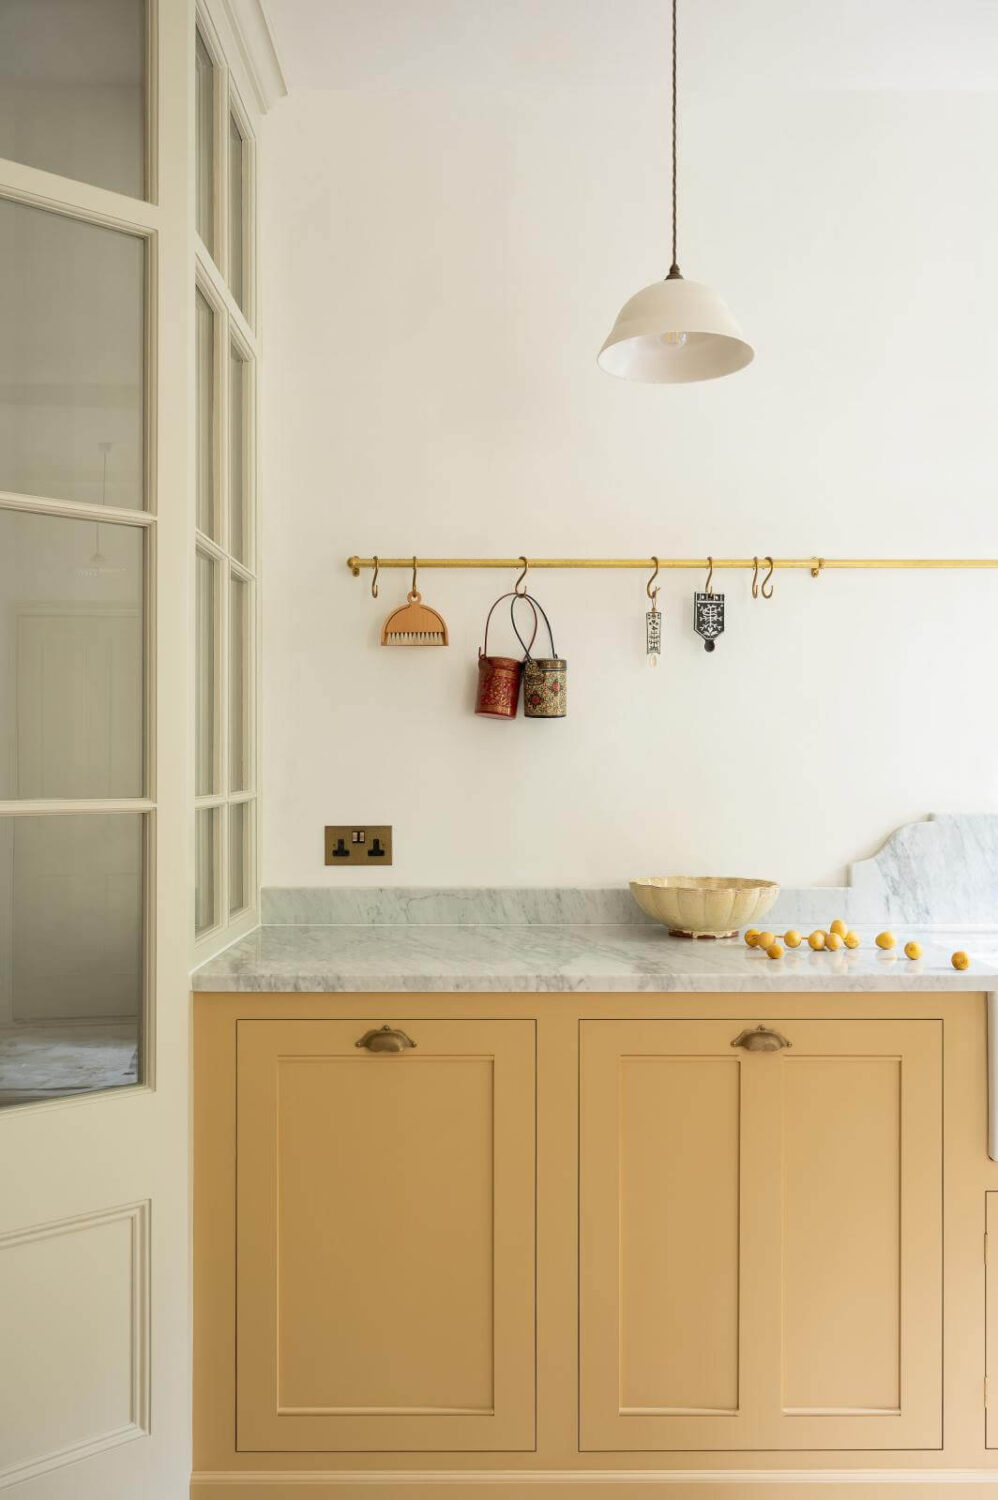 brass-hanging-rail-devol-kitchens-yellow-cabinets-nordroom